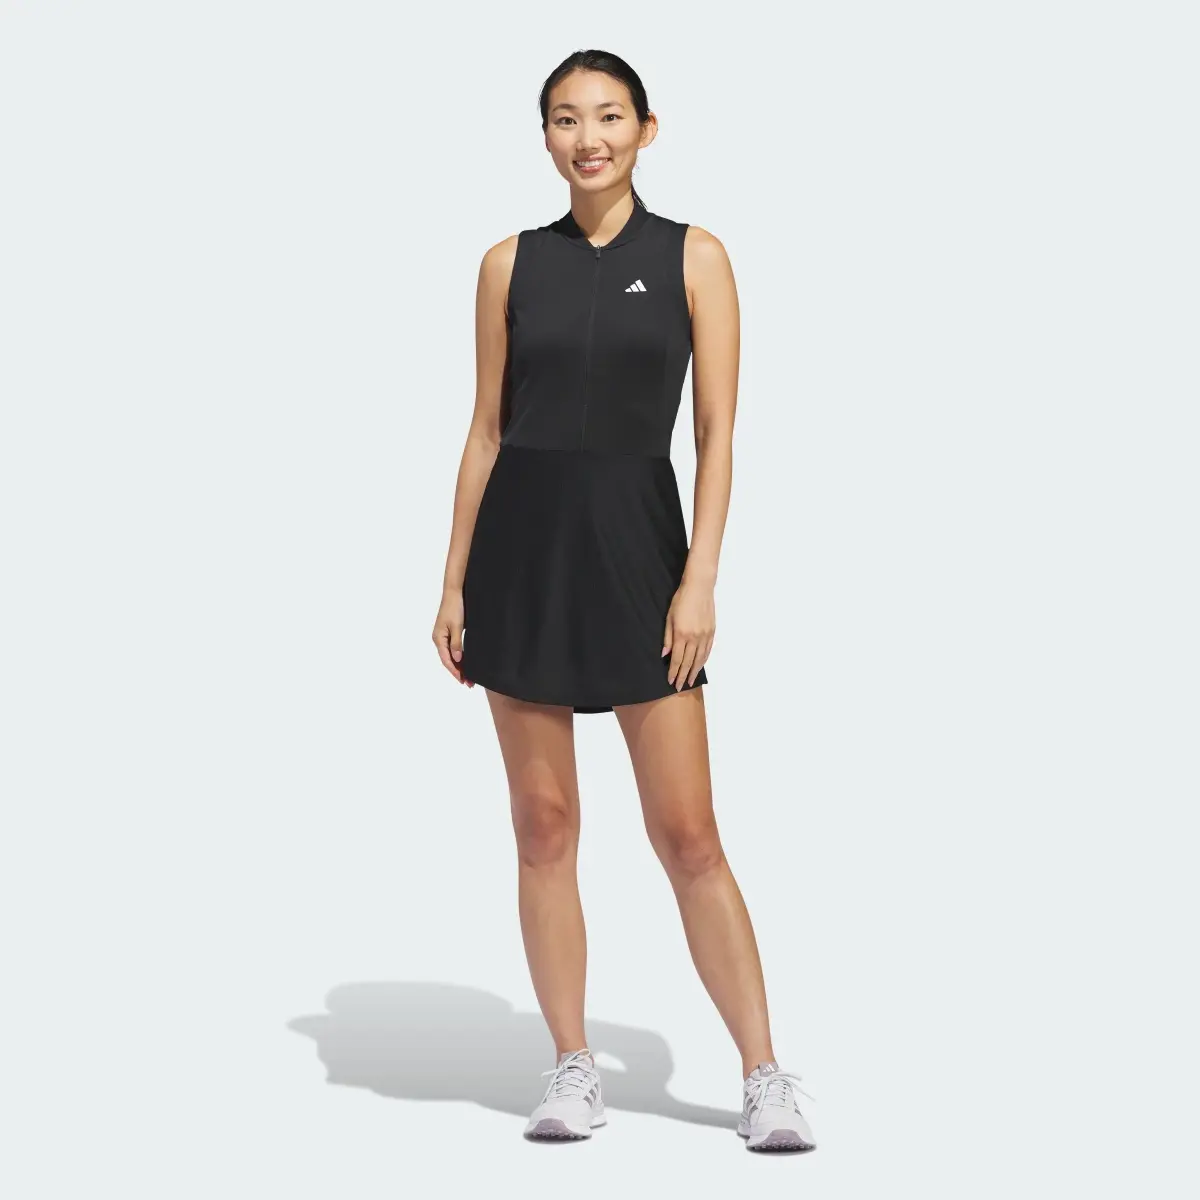 Adidas Women's Ultimate365 Sleeveless Dress. 2